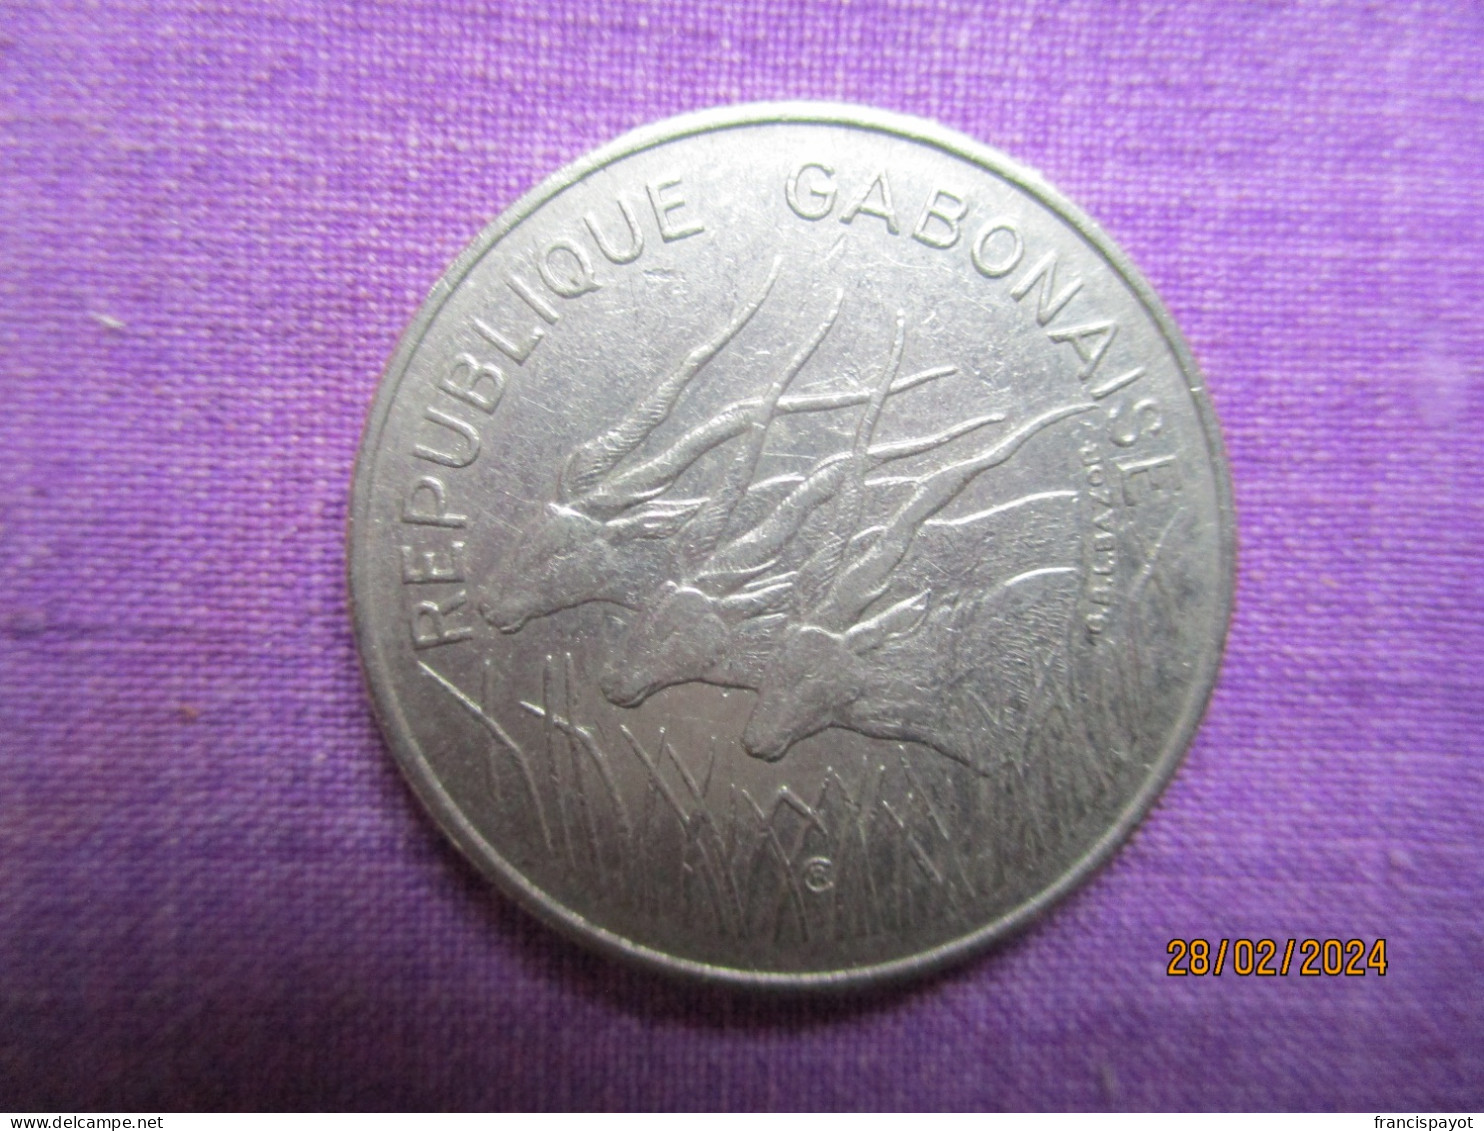 Gabon: 100 Francs CFA 1975 - Gabon